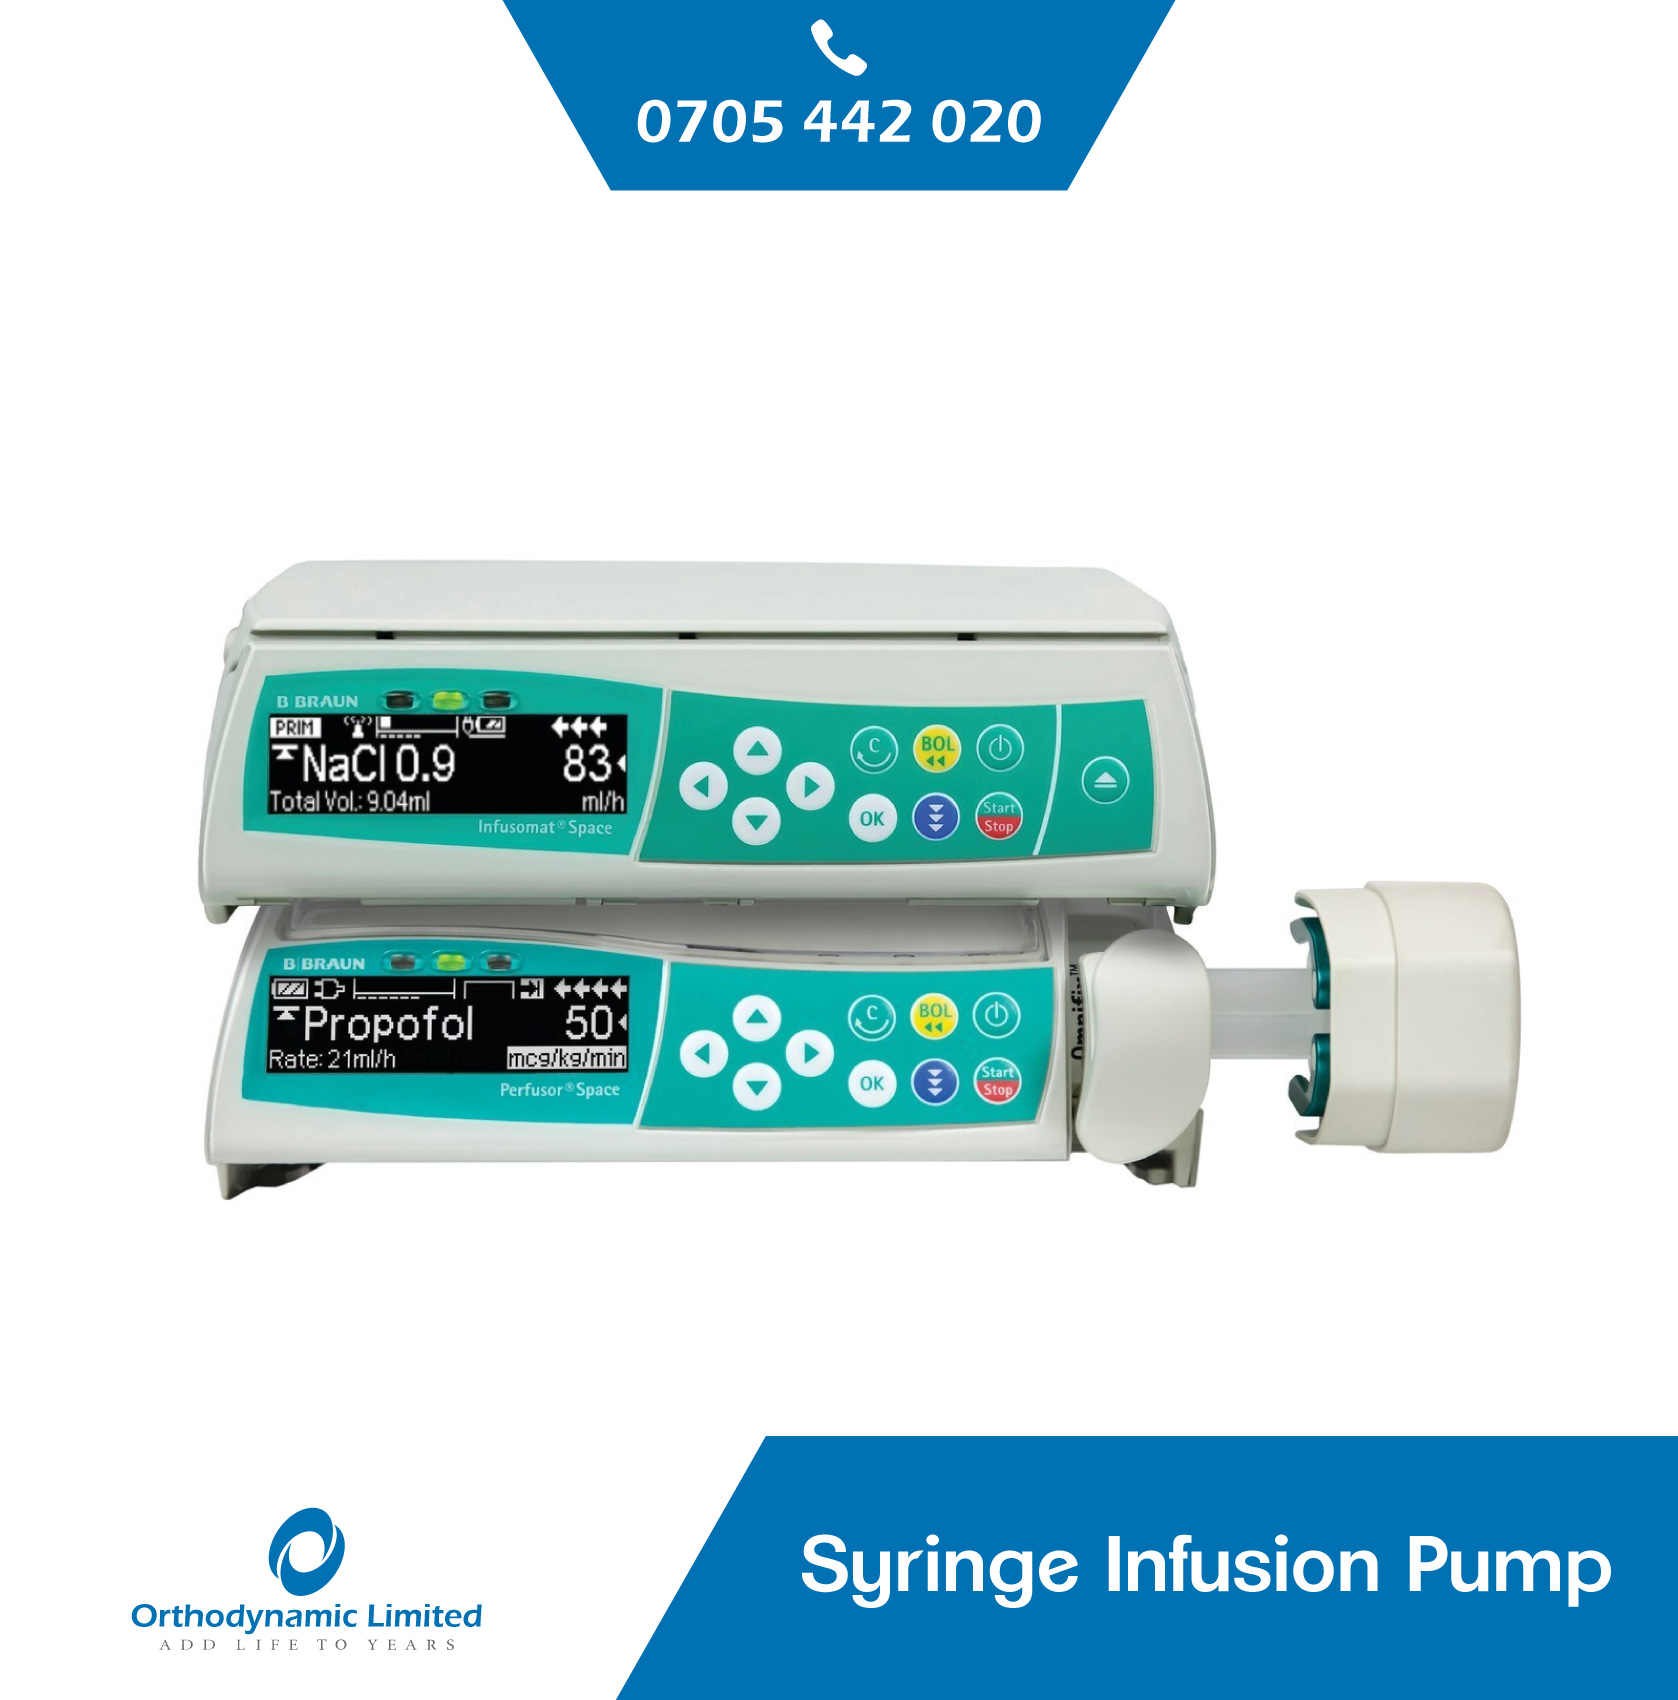 Syringe infusion pump